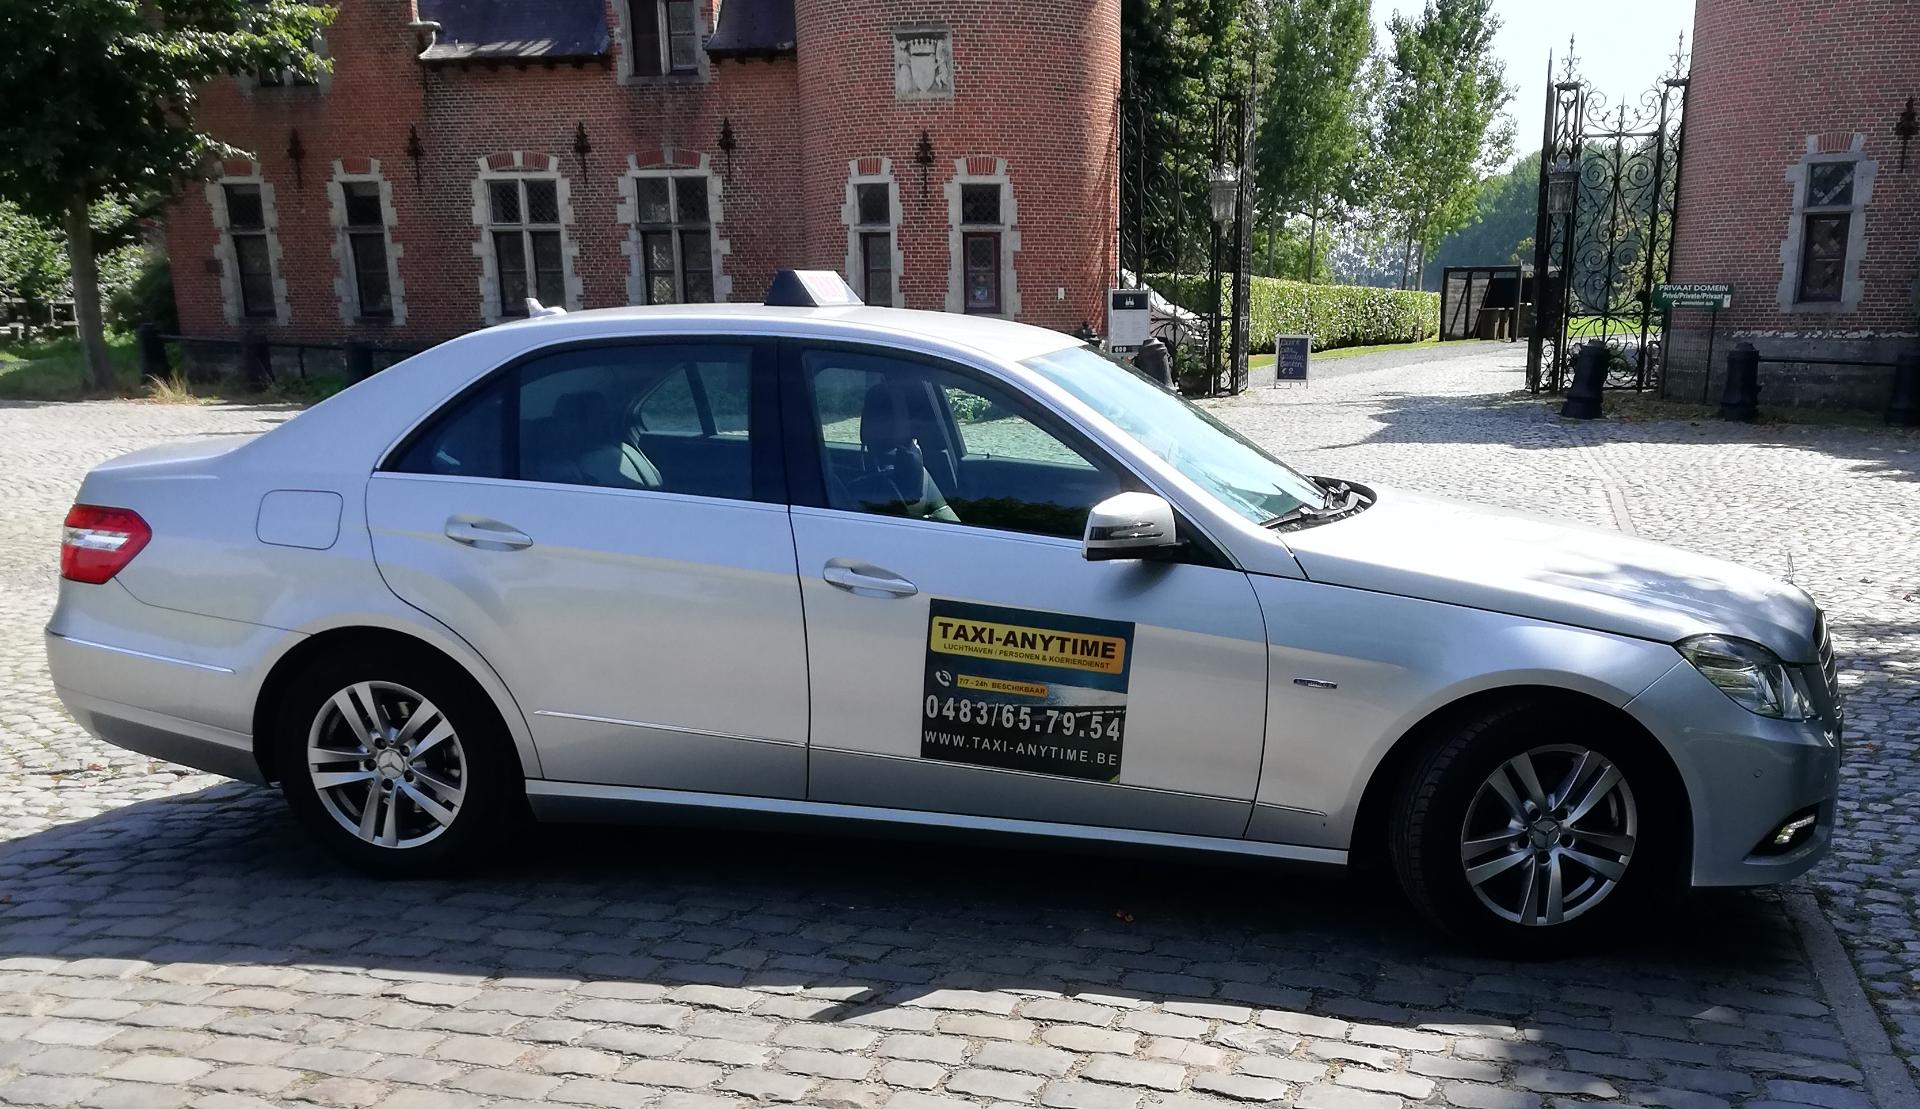 taxibedrijven met luchthavenvervoer Hansbeke Taxi Anytime